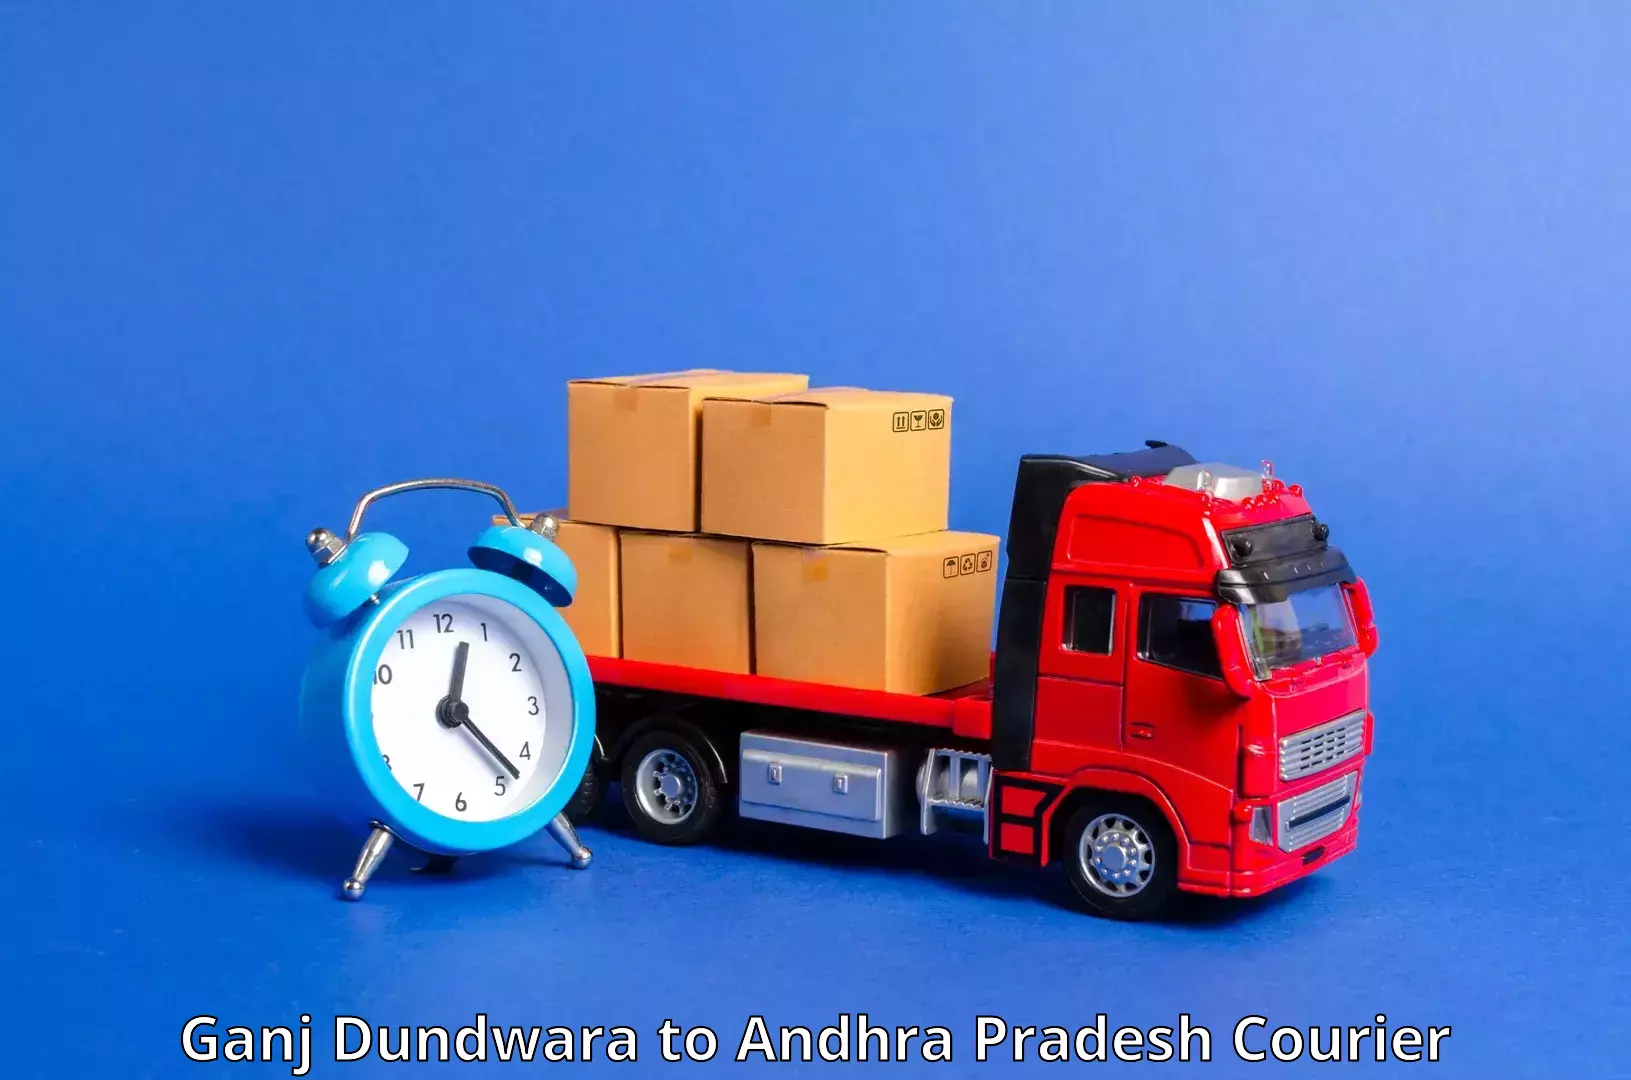 Round-the-clock parcel delivery Ganj Dundwara to Kathipudi